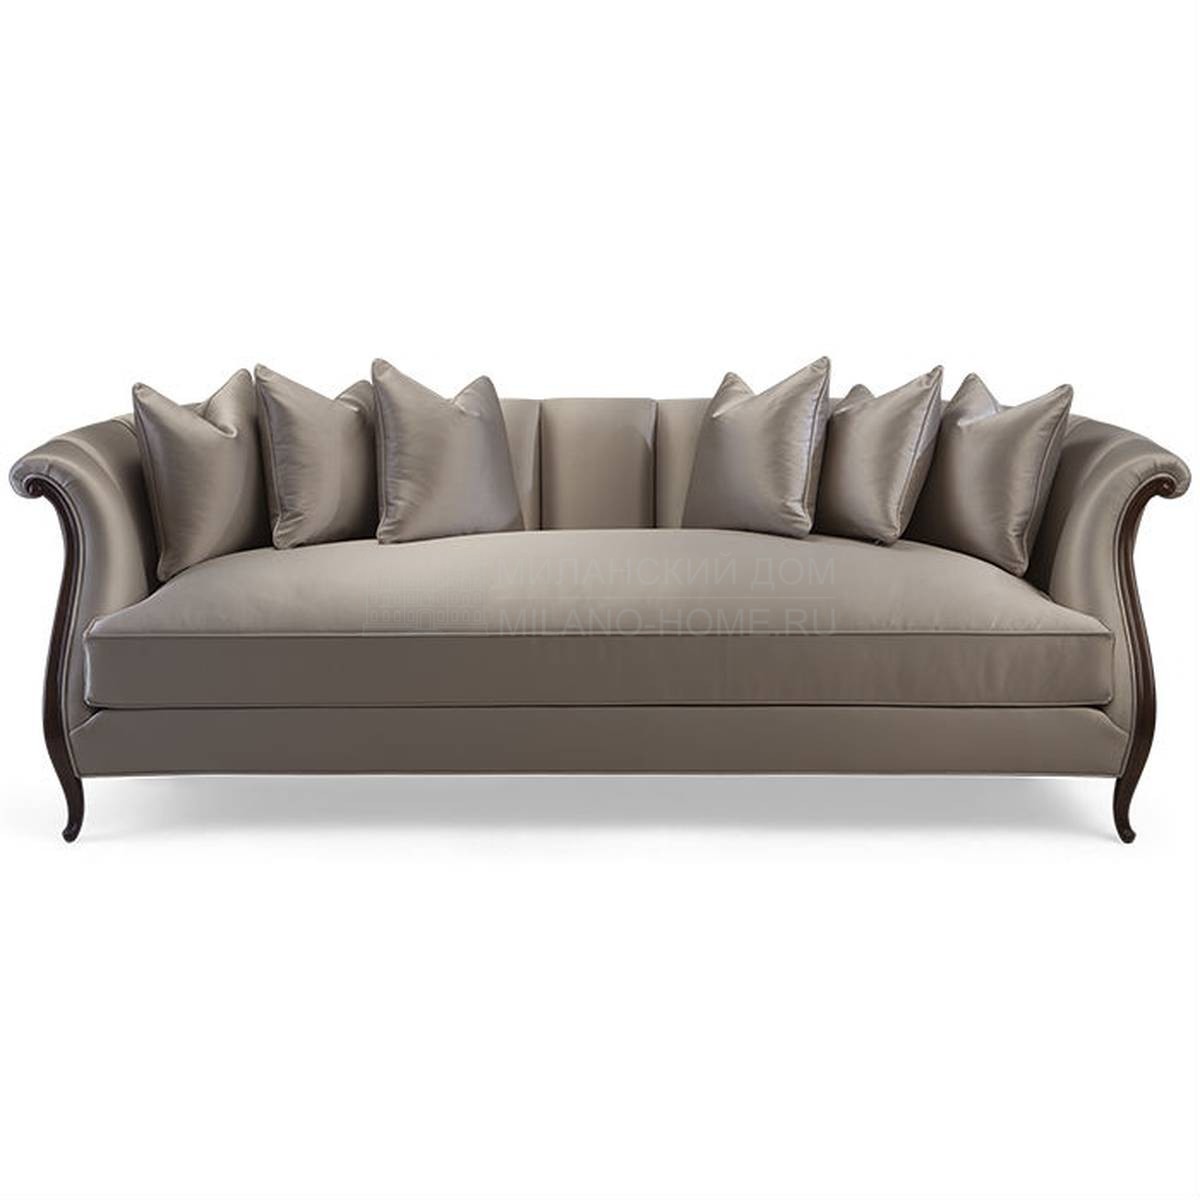 Прямой диван Ginevre sofa из США фабрики CHRISTOPHER GUY